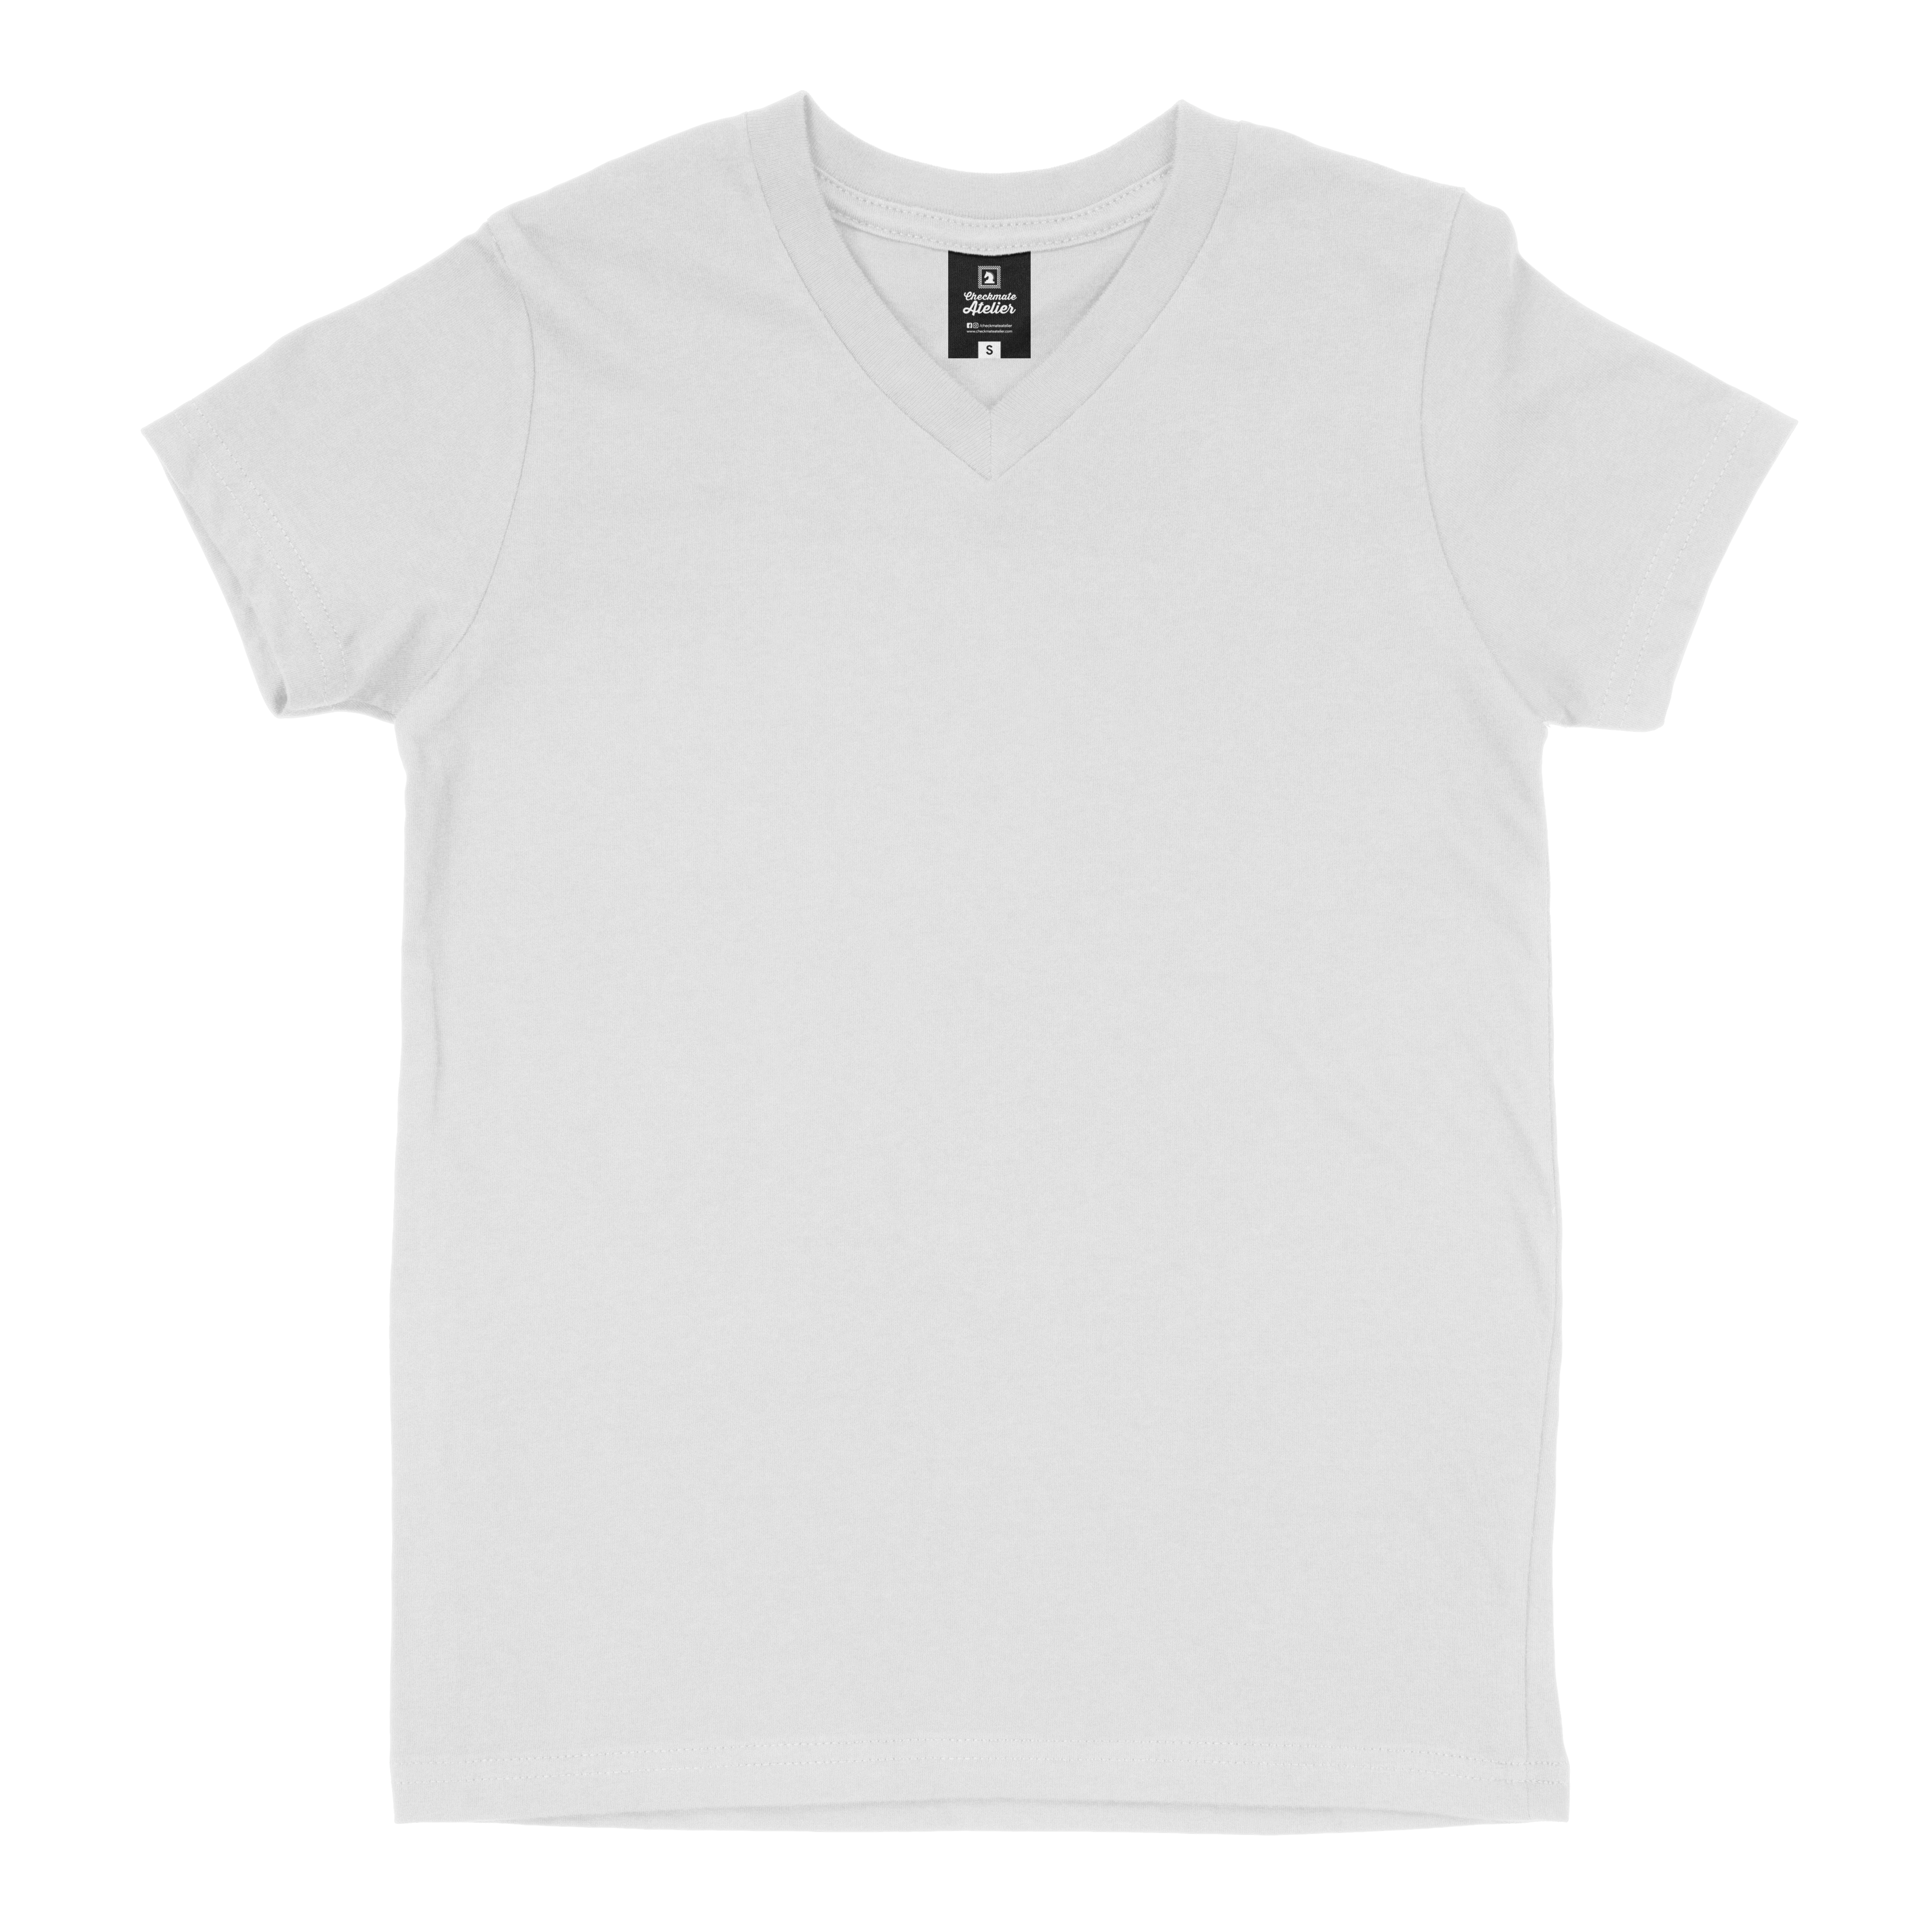 White V-Neck T-Shirt  (2XL - 3XL) - Shop Now - Checkmate Atelier